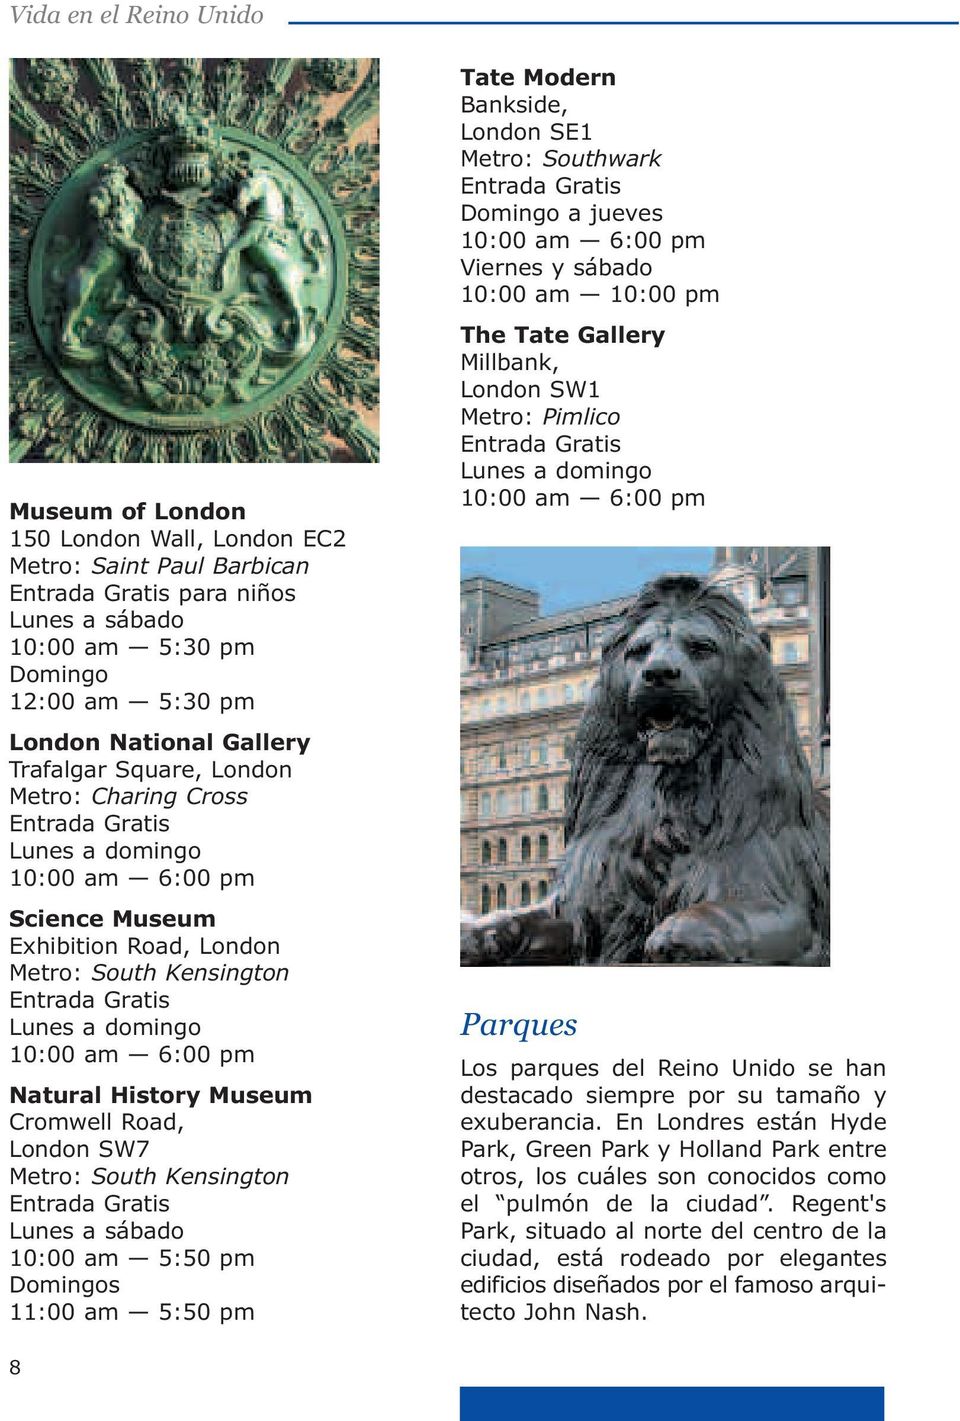 10:00 am 6:00 pm Natural History Museum Cromwell Road, London SW7 Metro: South Kensington Entrada Gratis Lunes a sábado 10:00 am 5:50 pm Domingos 11:00 am 5:50 pm Tate Modern Bankside, London SE1